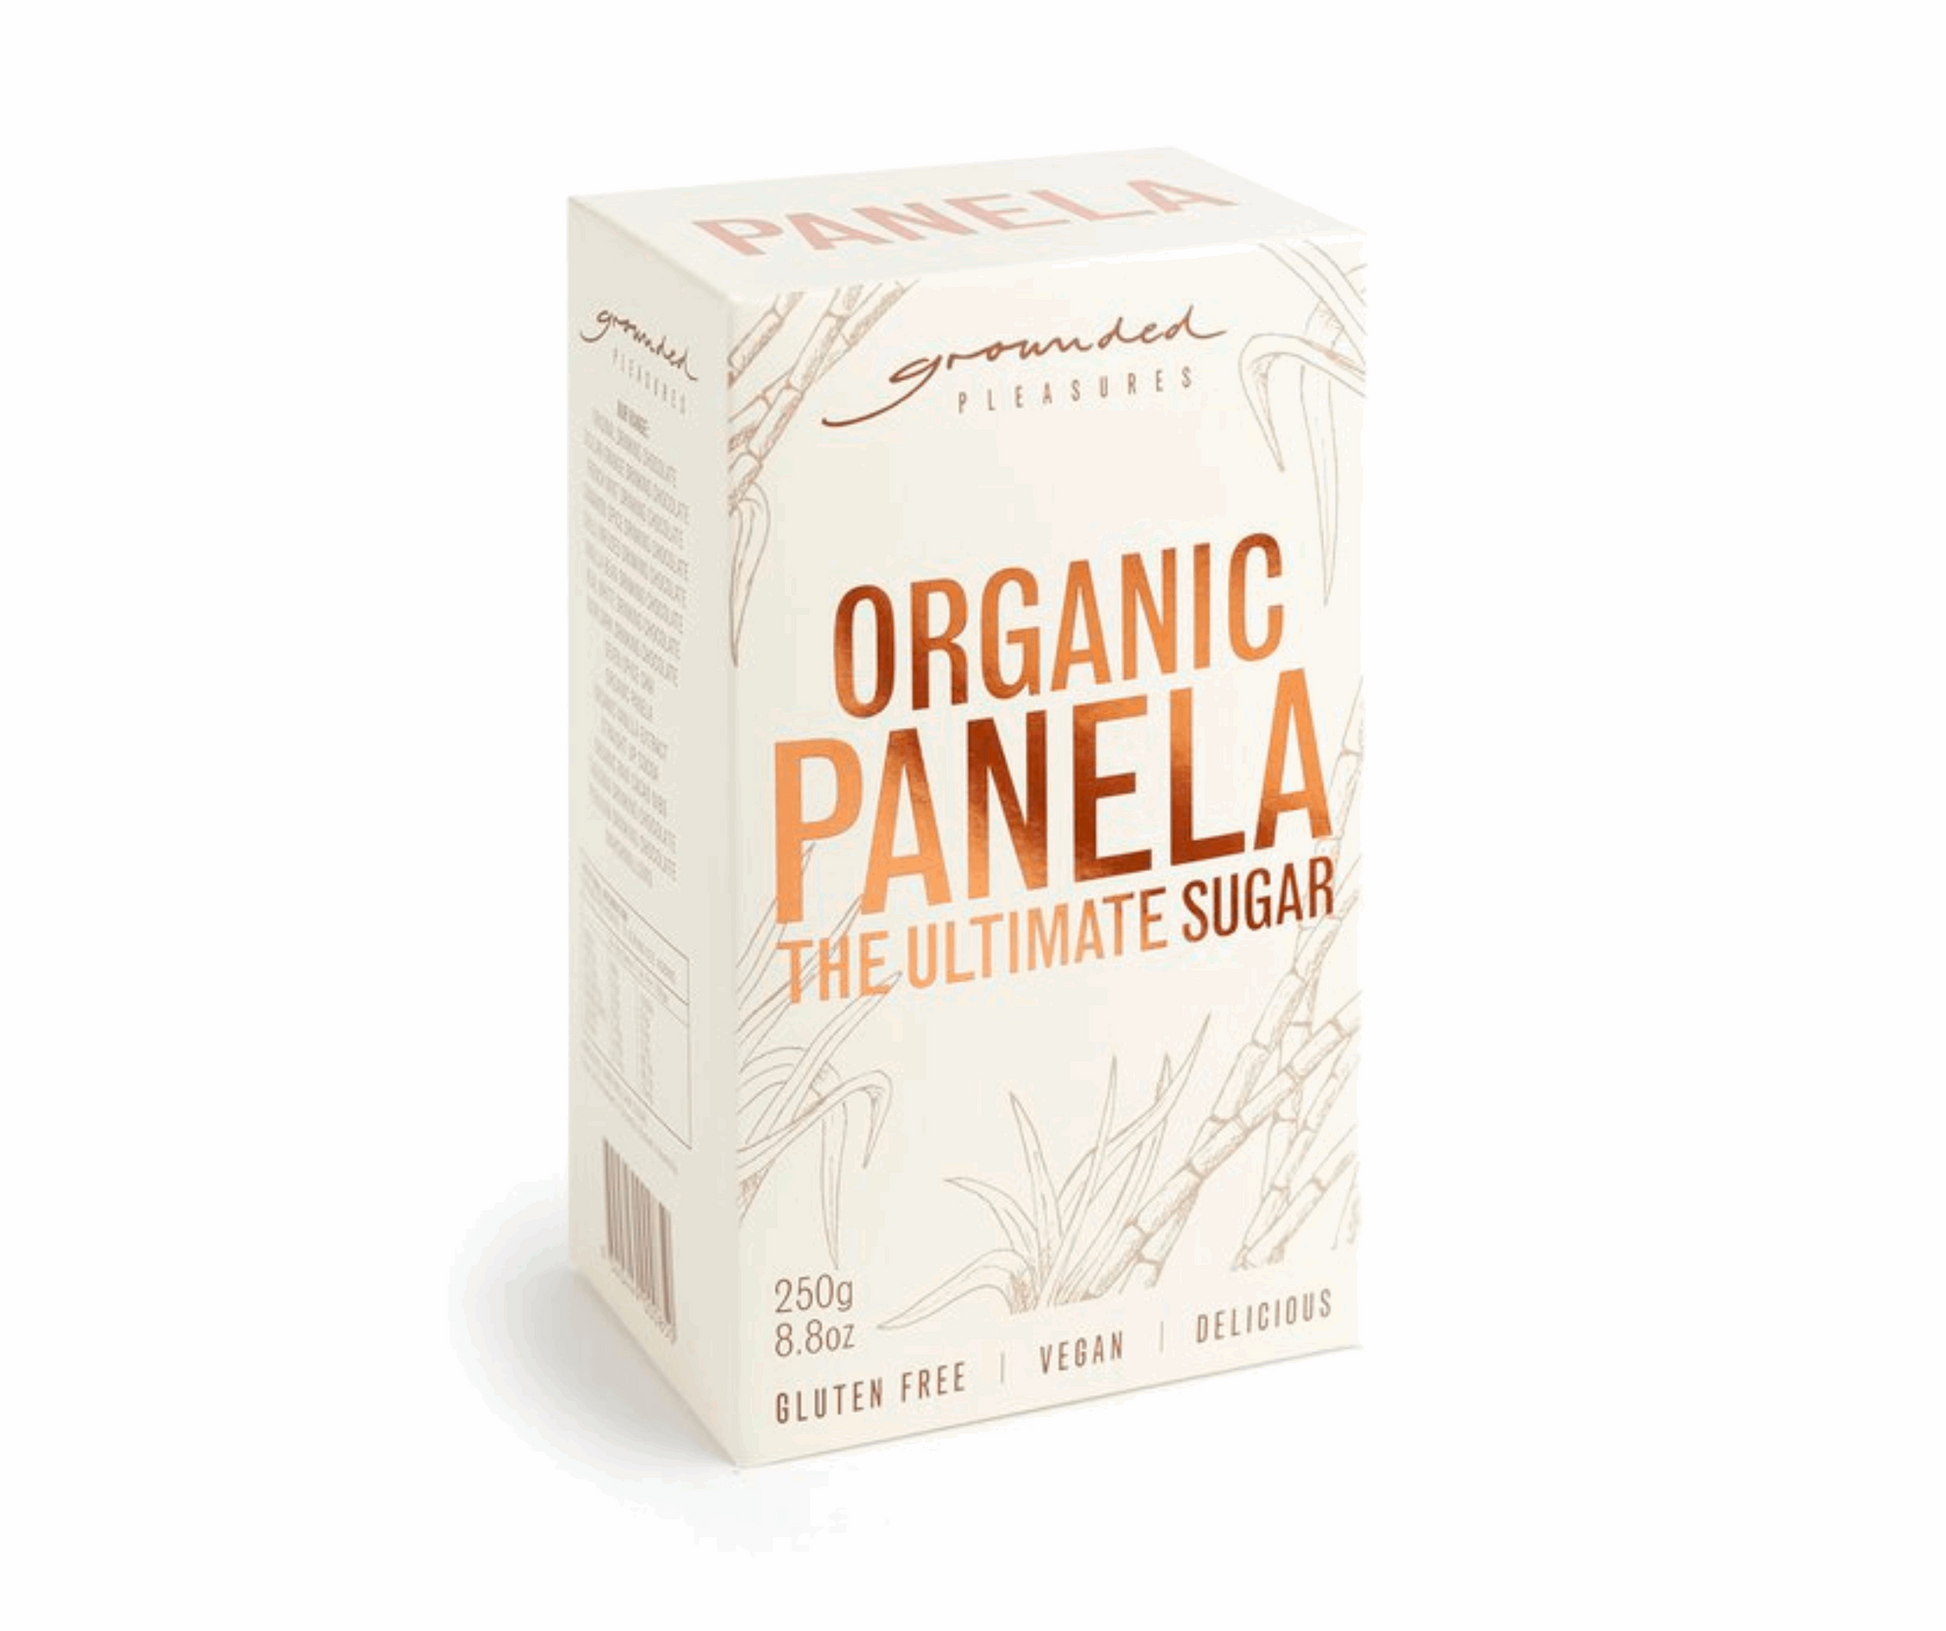 Organic Panela Sugar Pantry Grounded Pleasures   